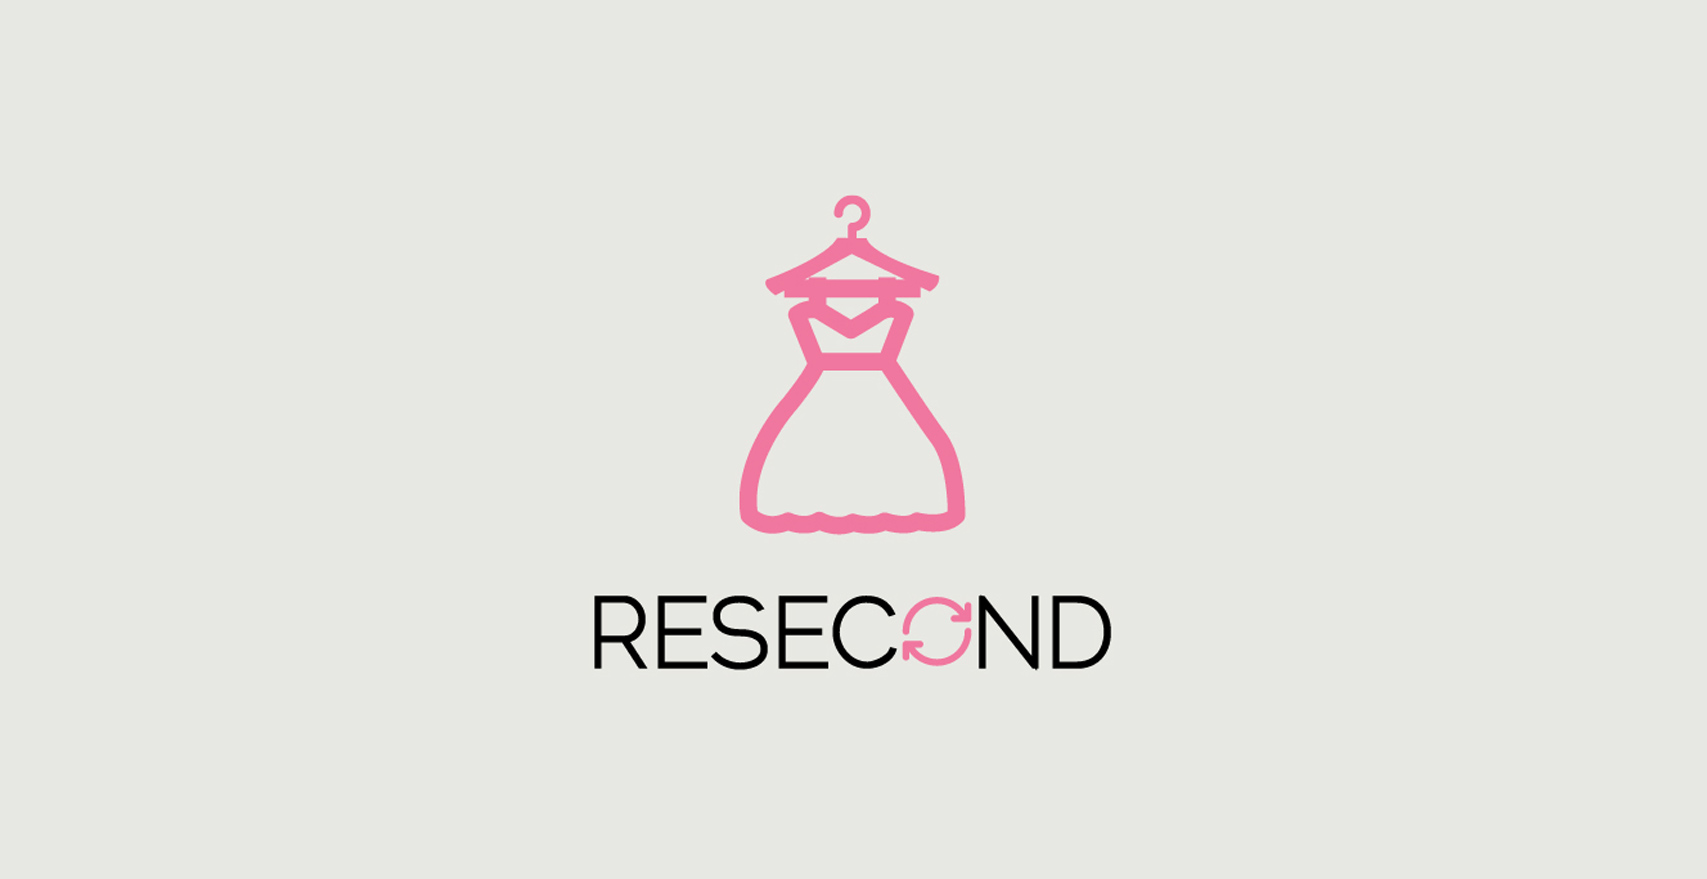 
Resecond Logo
